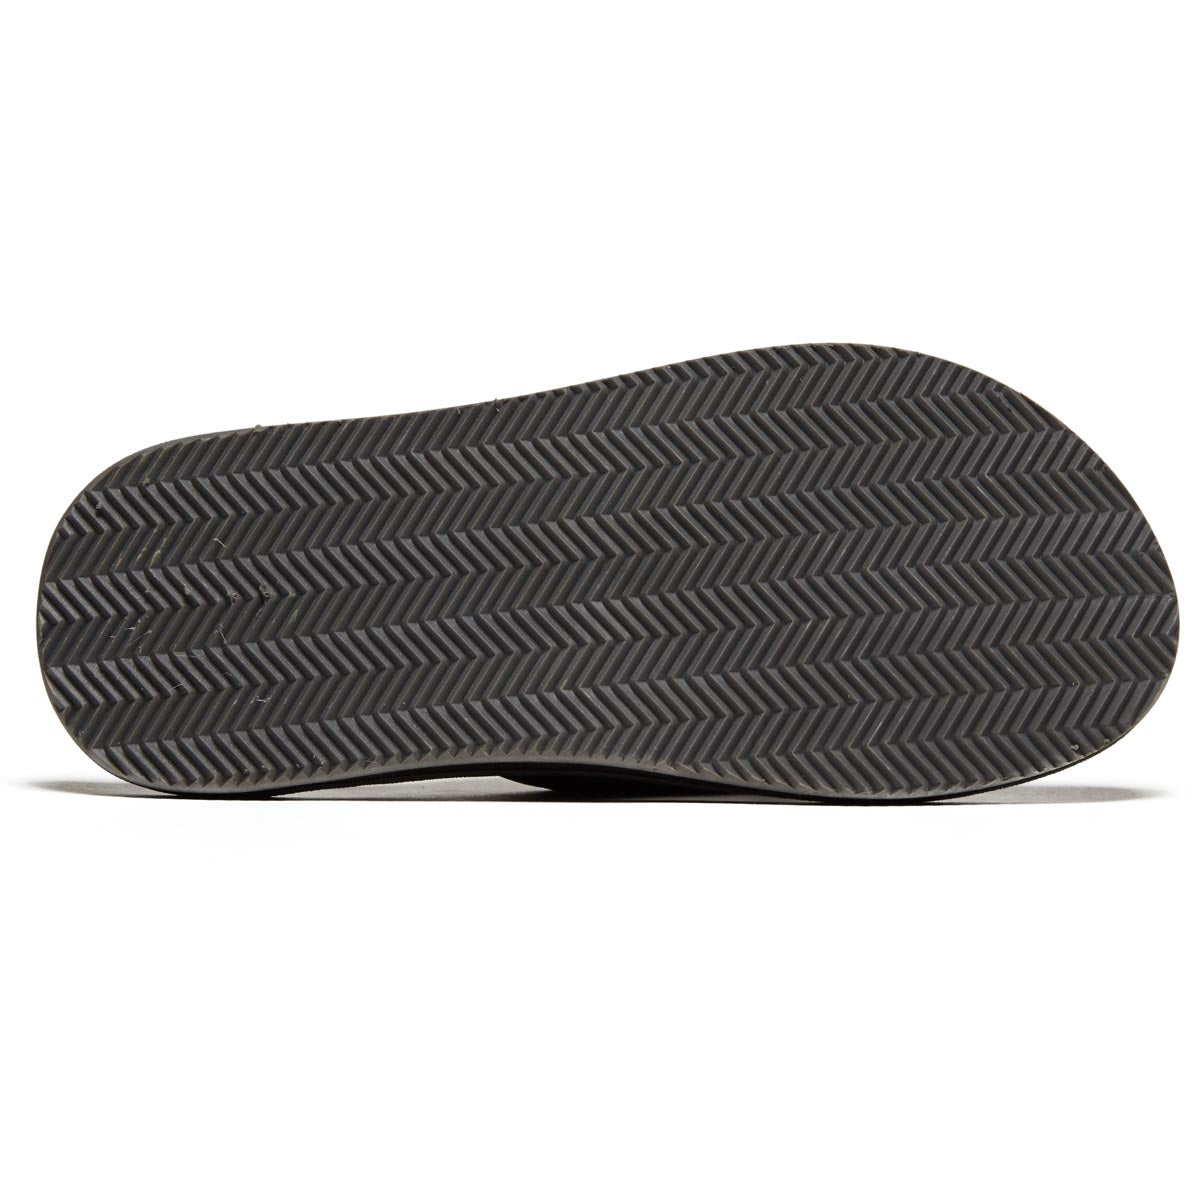 RVCA Sandbar Sandal Shoes - Charcoal image 4